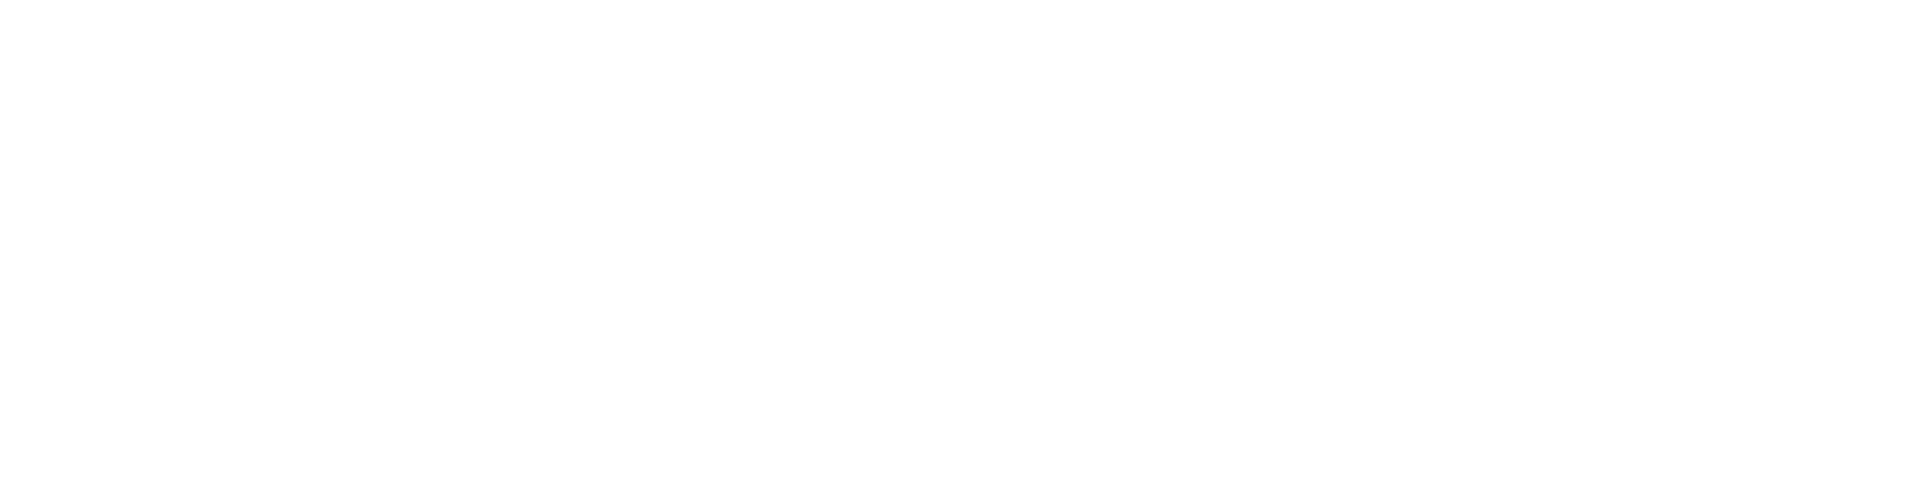 logo sport1 white